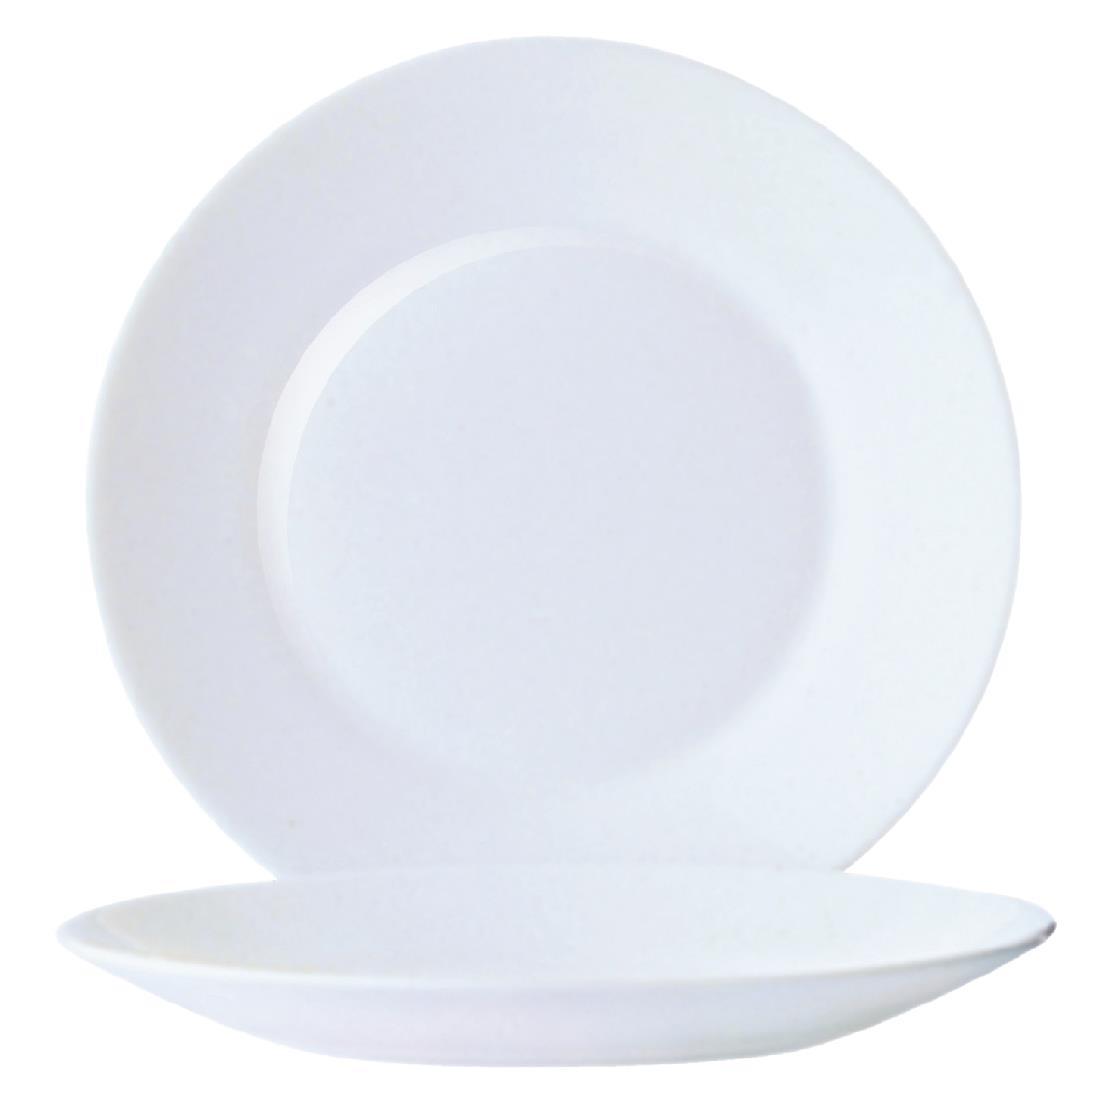 Arcoroc Opal Restaurant Wide Rim Plates 195mm (Pack of 6) - DP066  - 1